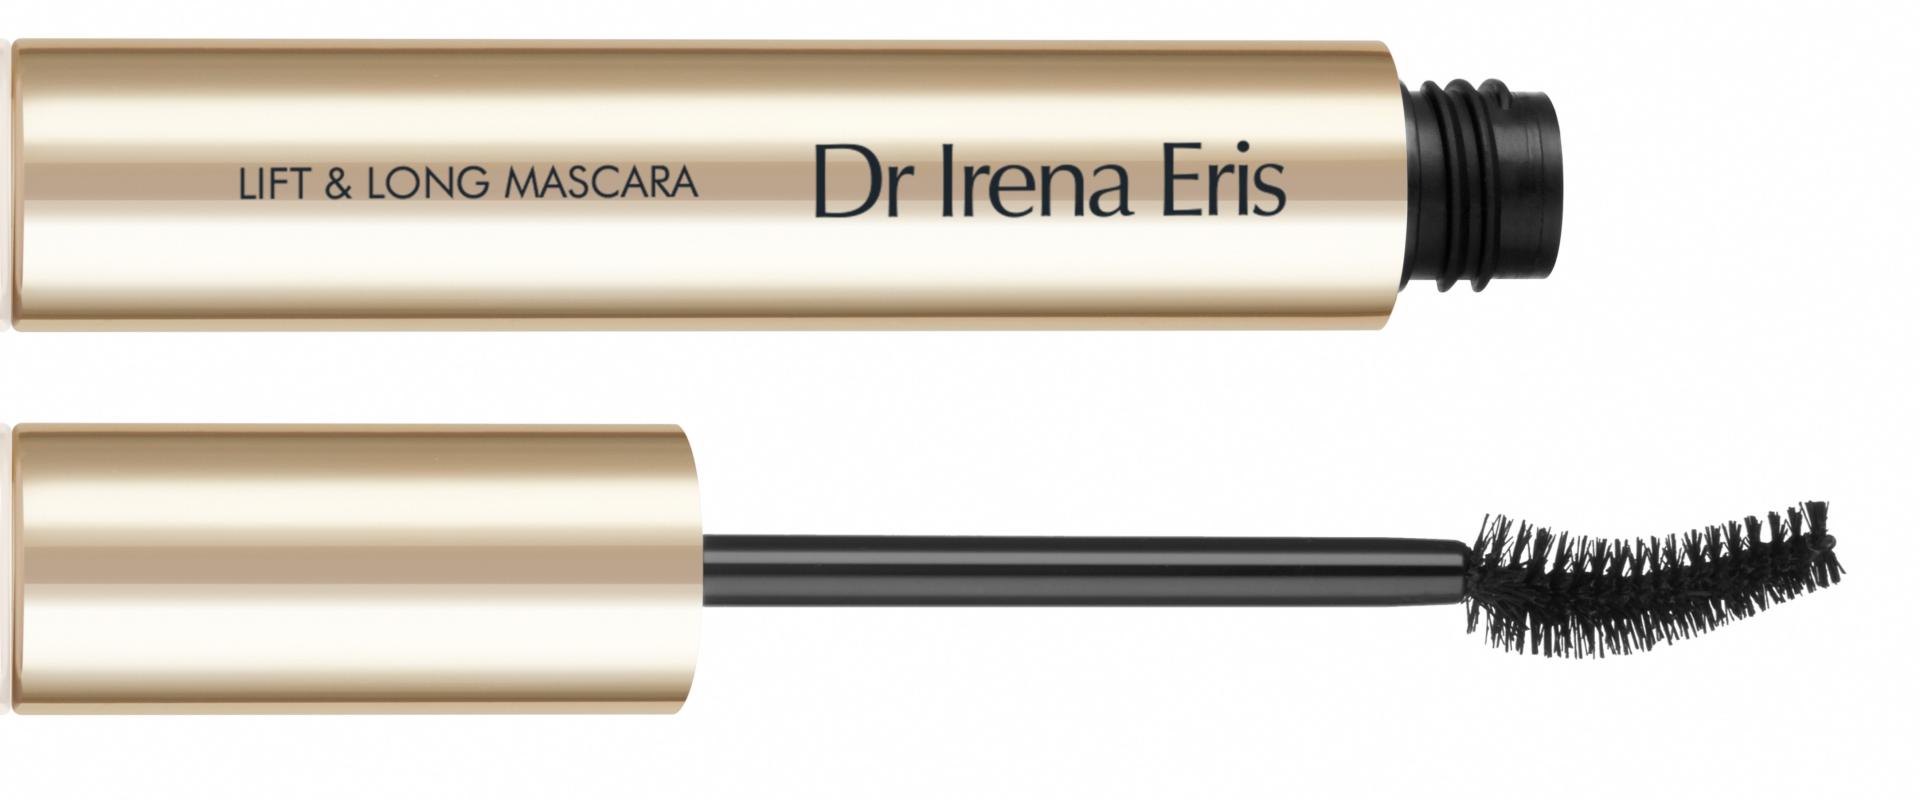 Nowa mascara w ofercie marki Dr Irena Eris